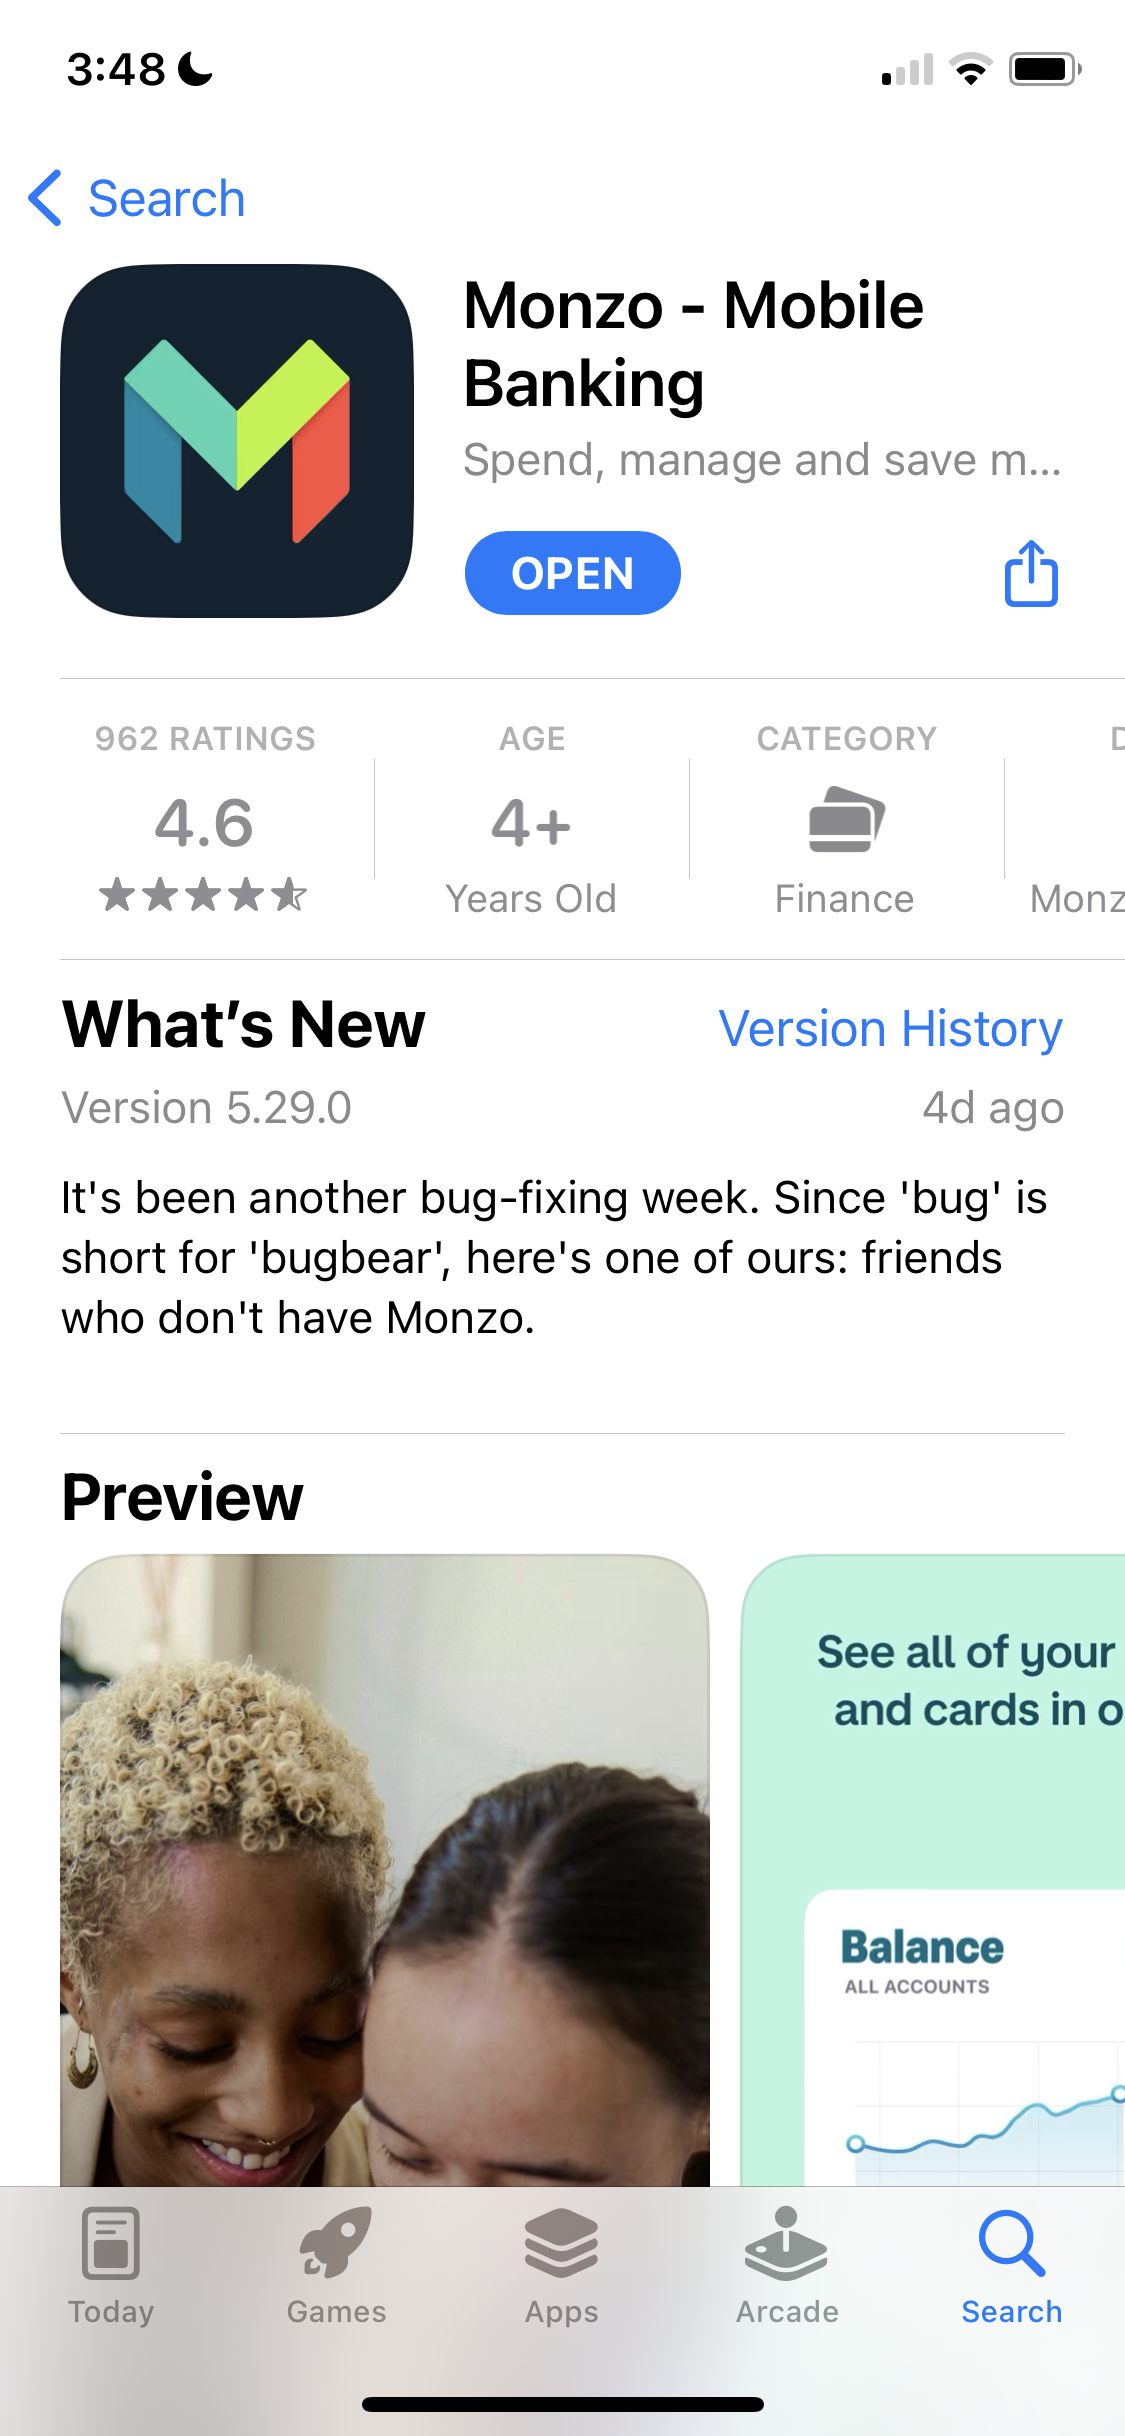 Monzo app store listing screenshot